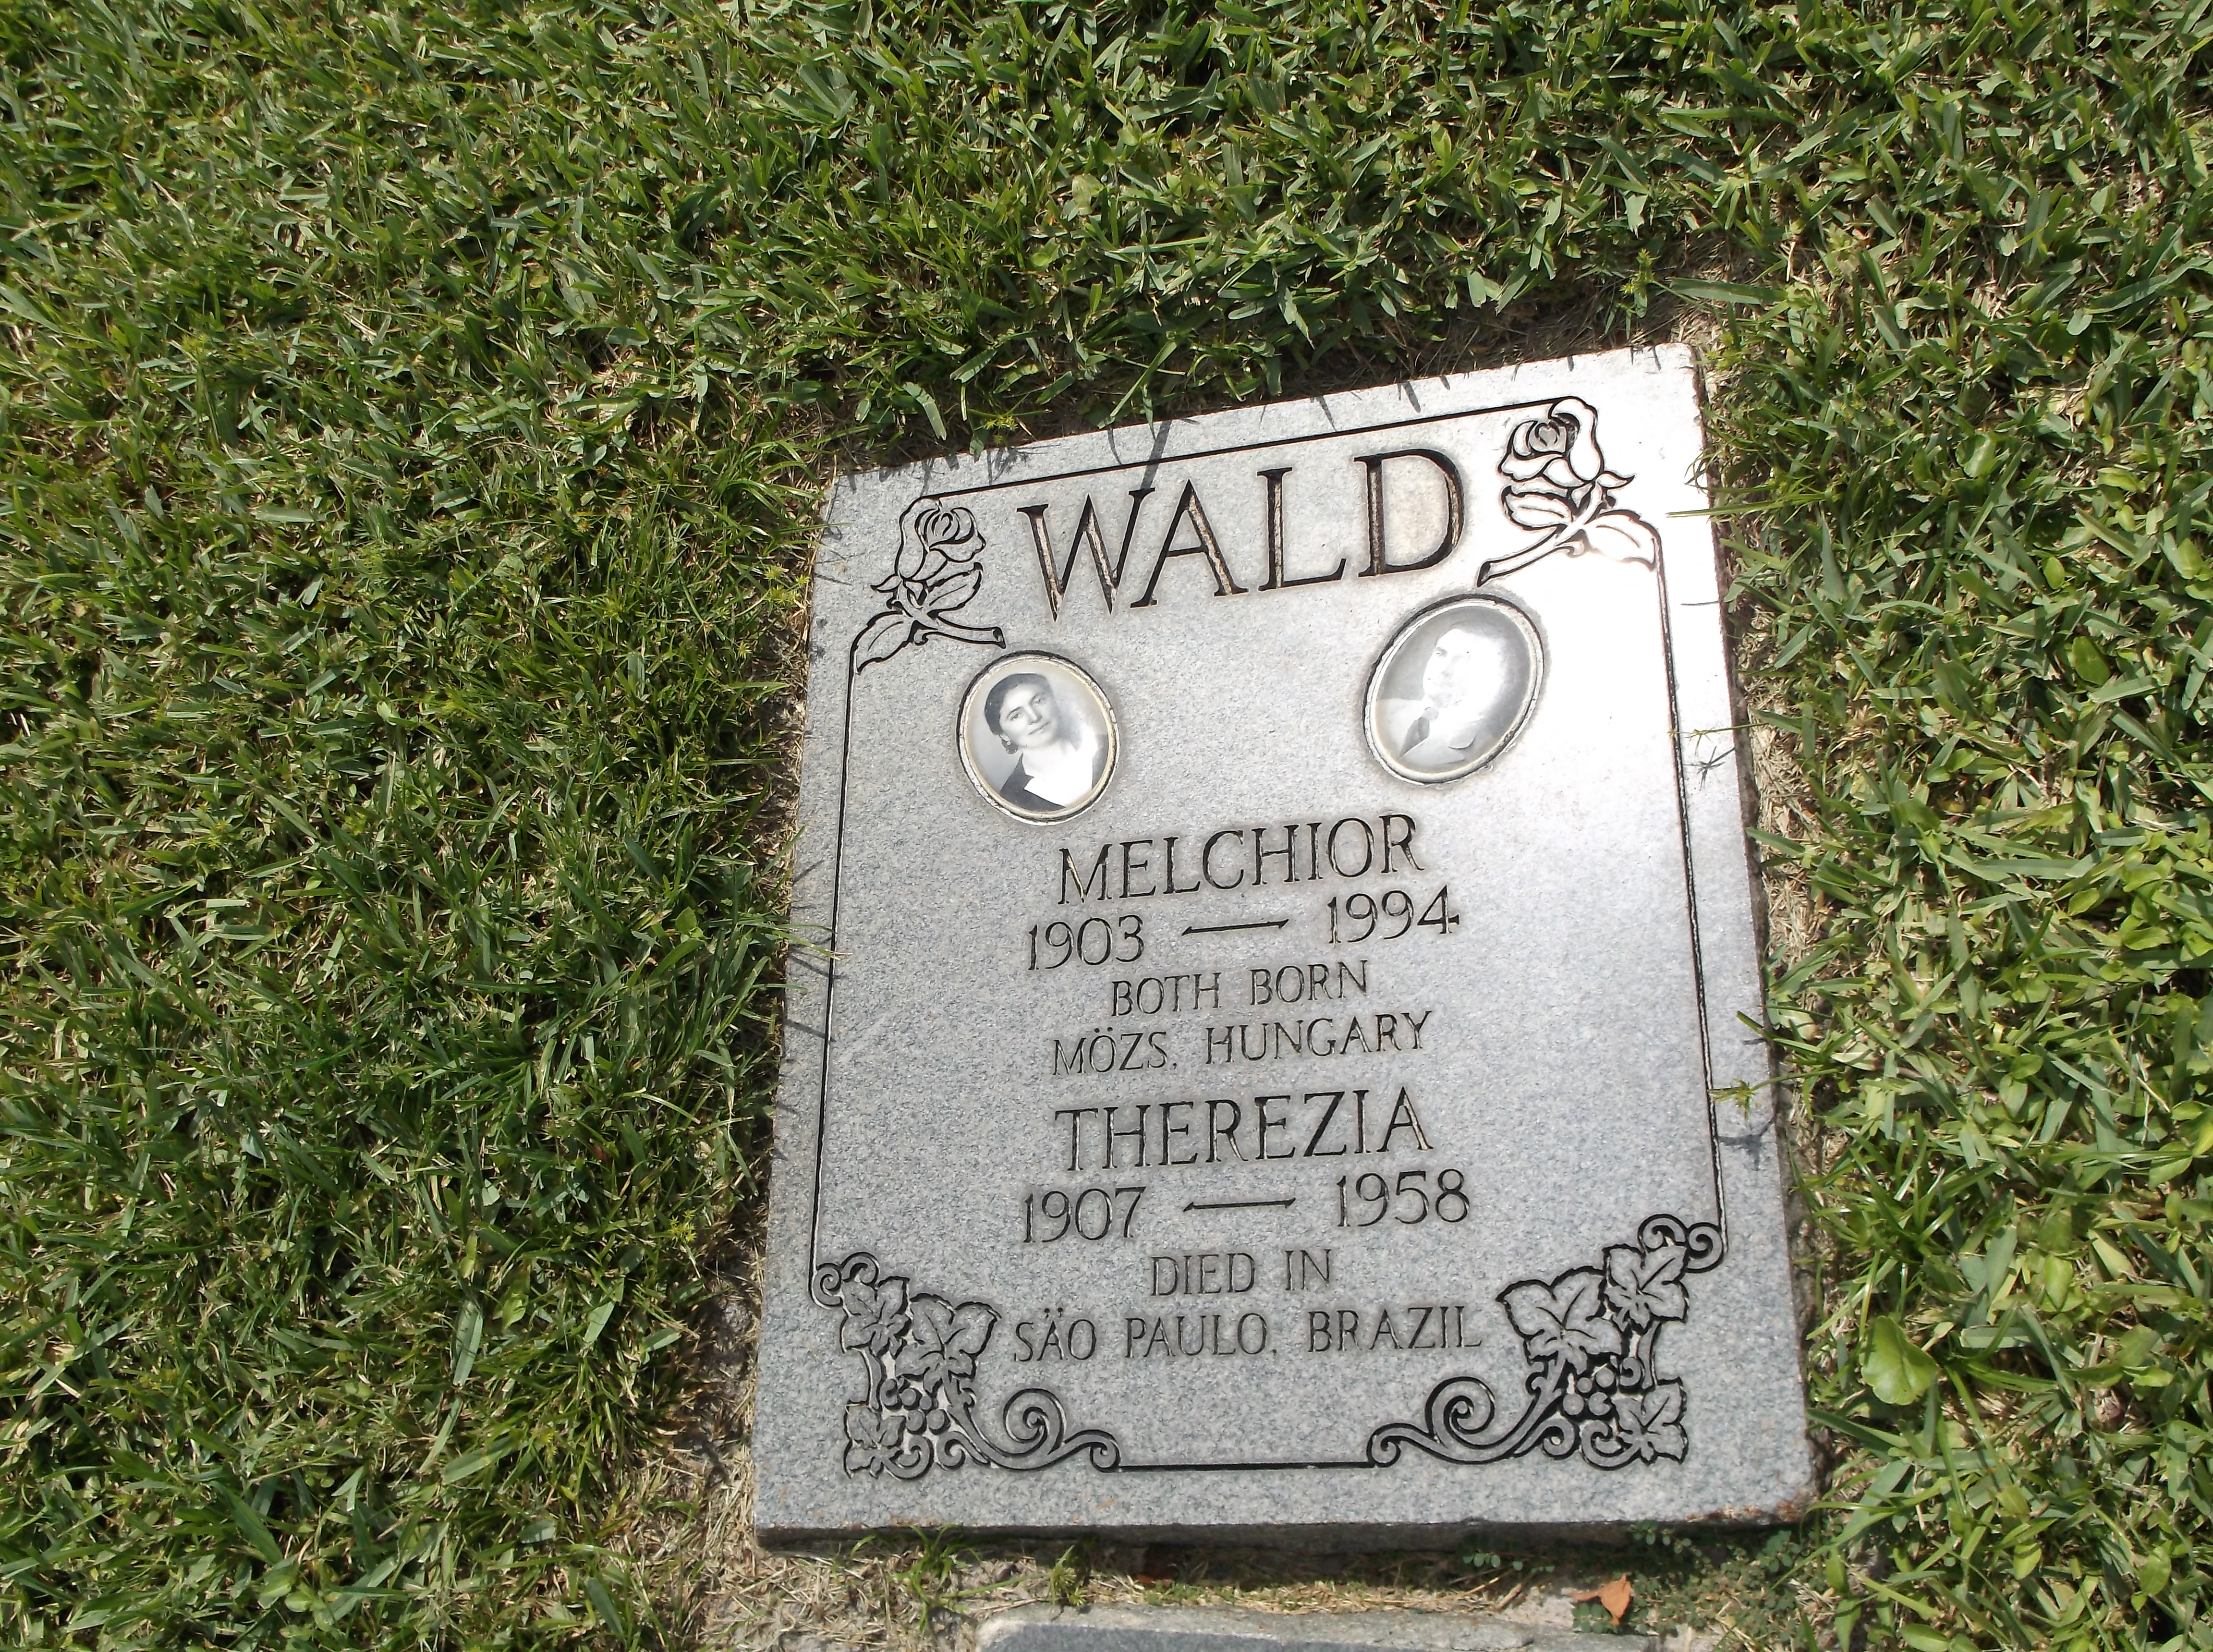 Melchior Wald